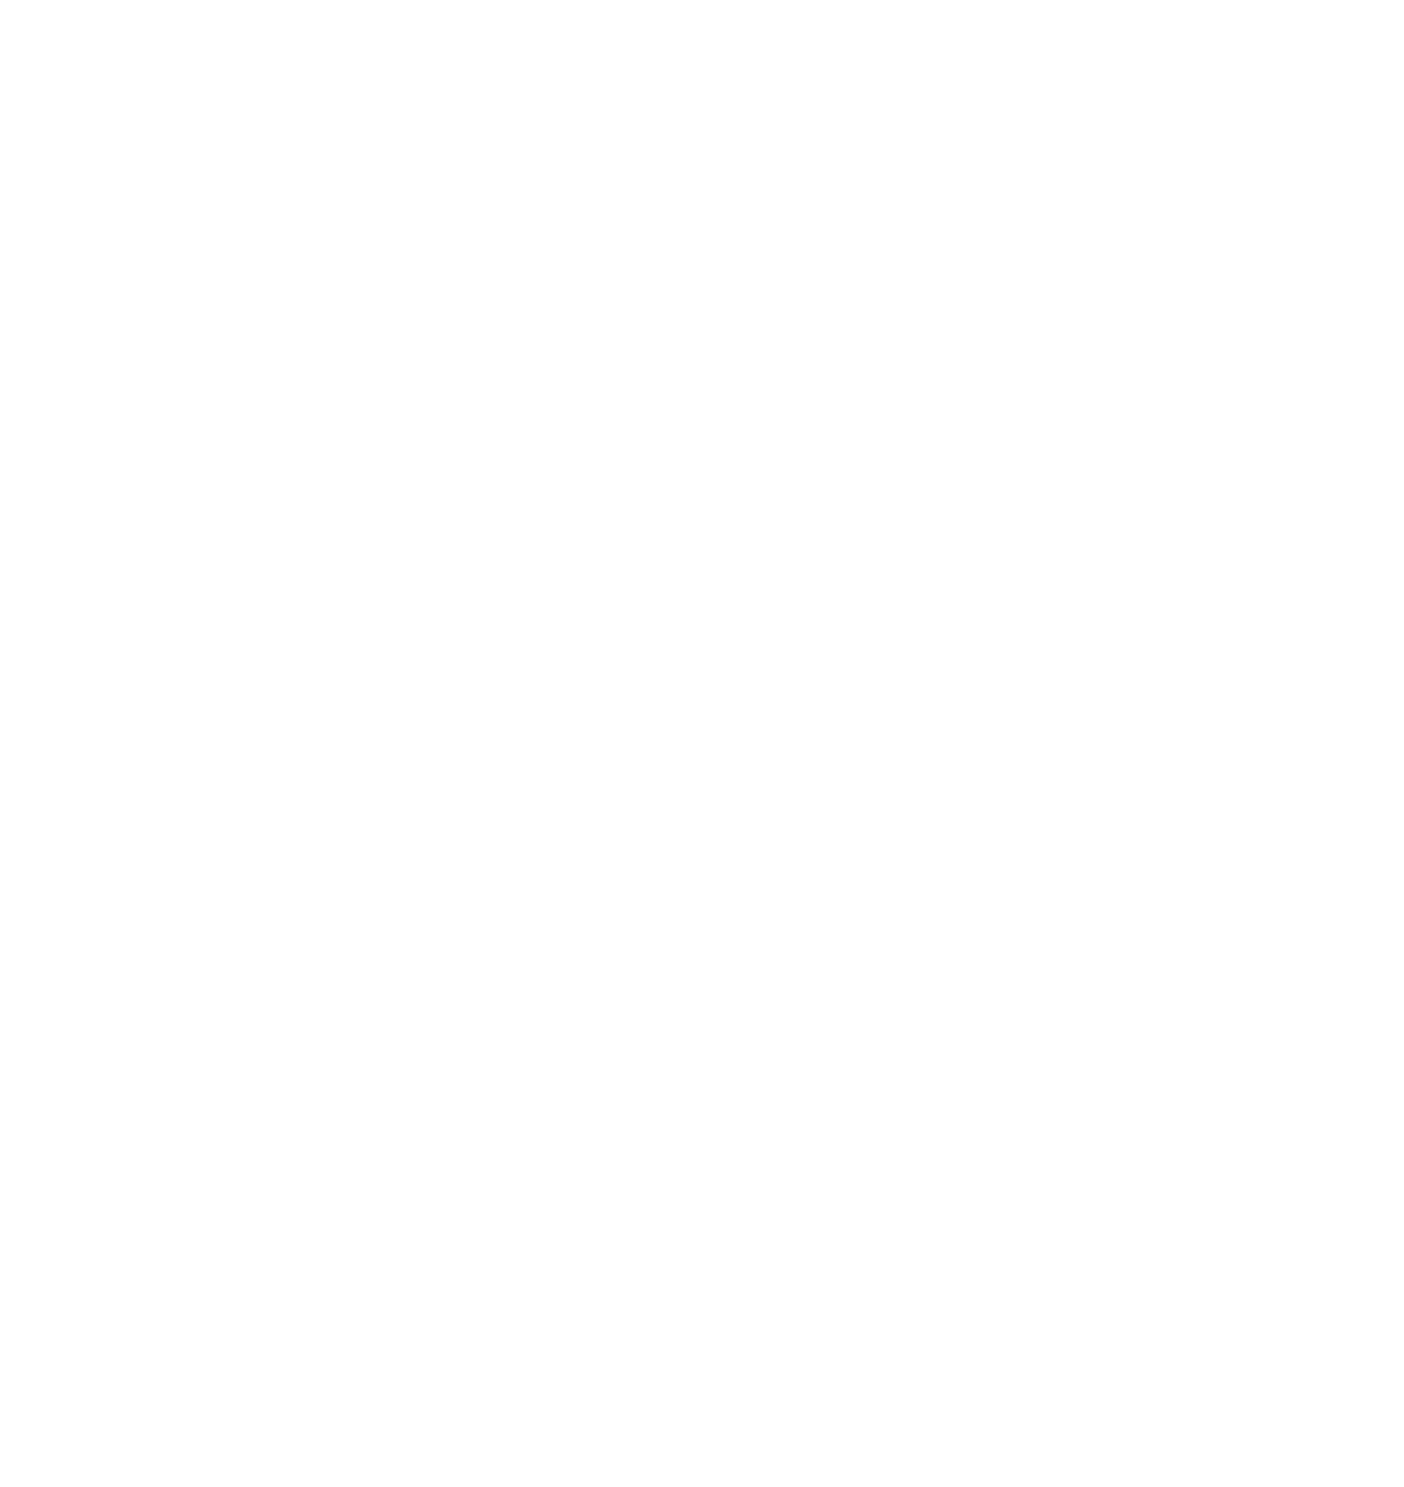 Octopus Management